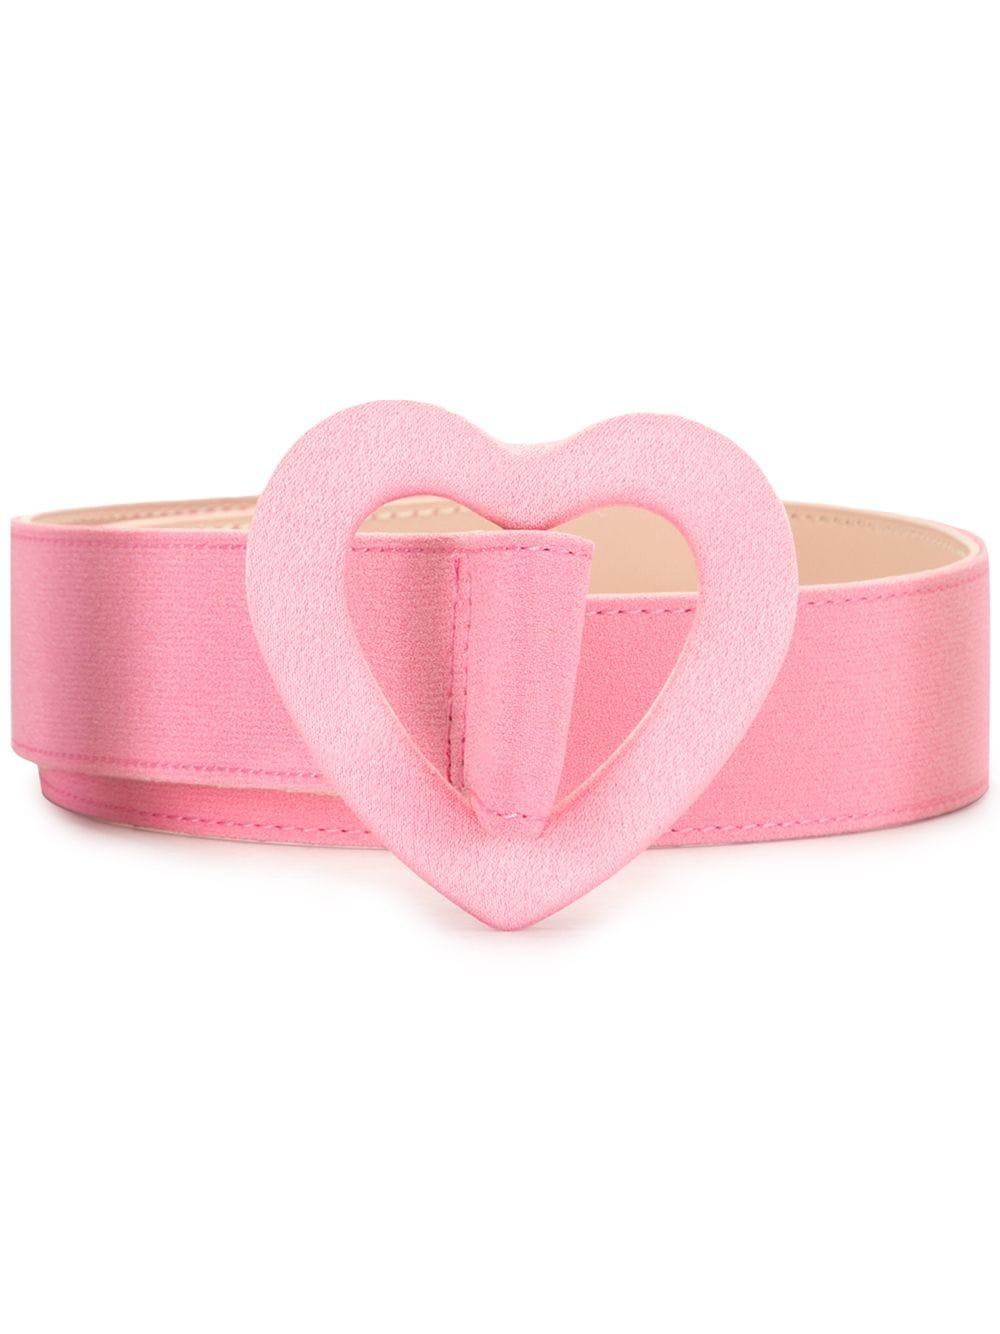 https://cdna.lystit.com/photos/farfetch/413ae1f4/paule-ka-pink-Heart-Shape-buckle-Belt.jpeg